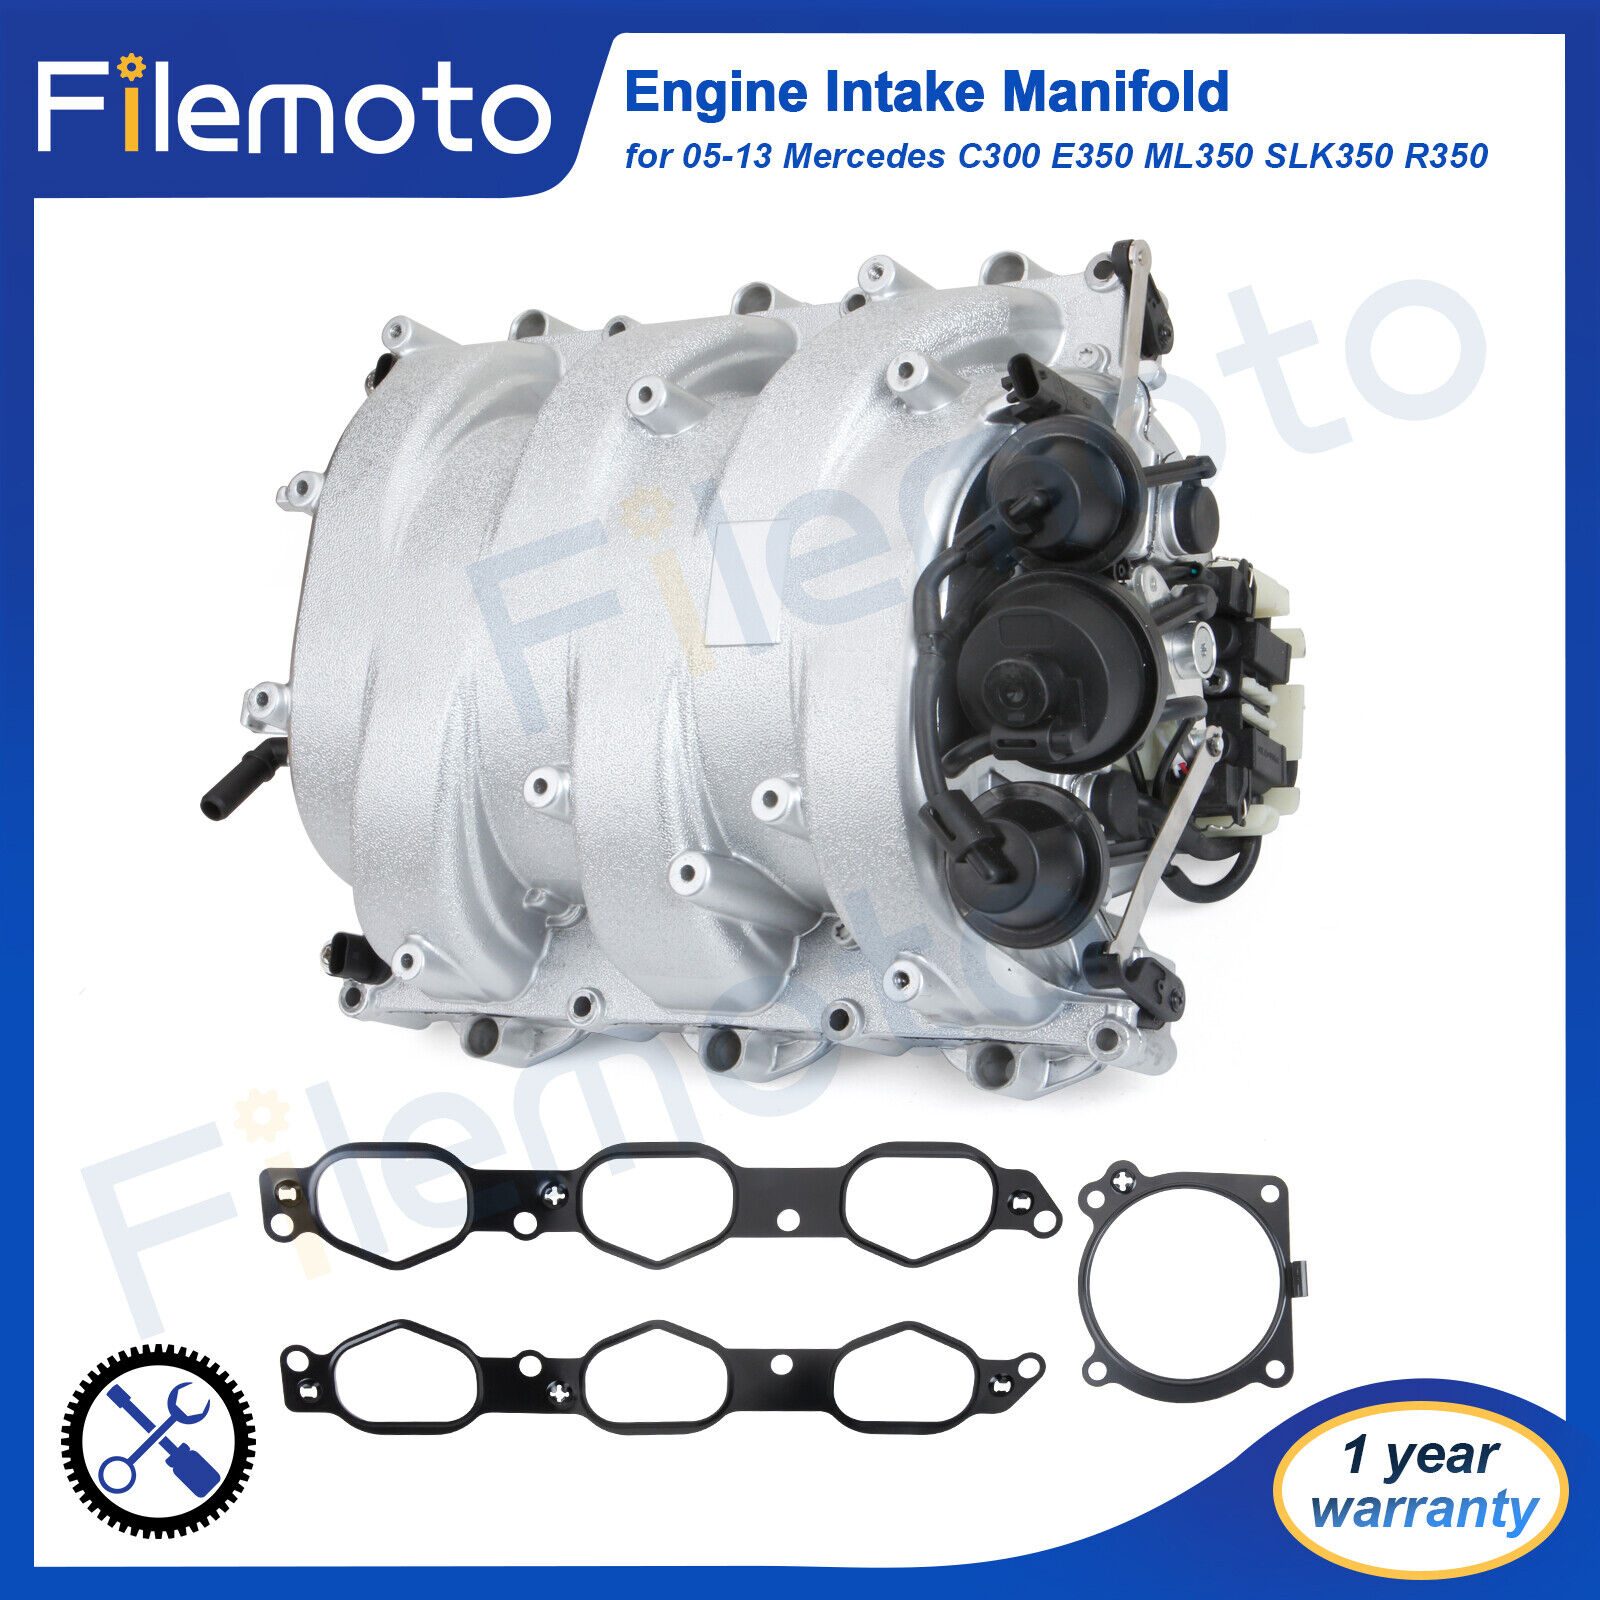 Engine Intake Manifold for 05-13 Mercedes C300 C350 E280 E350 ML350 SLK350 R350